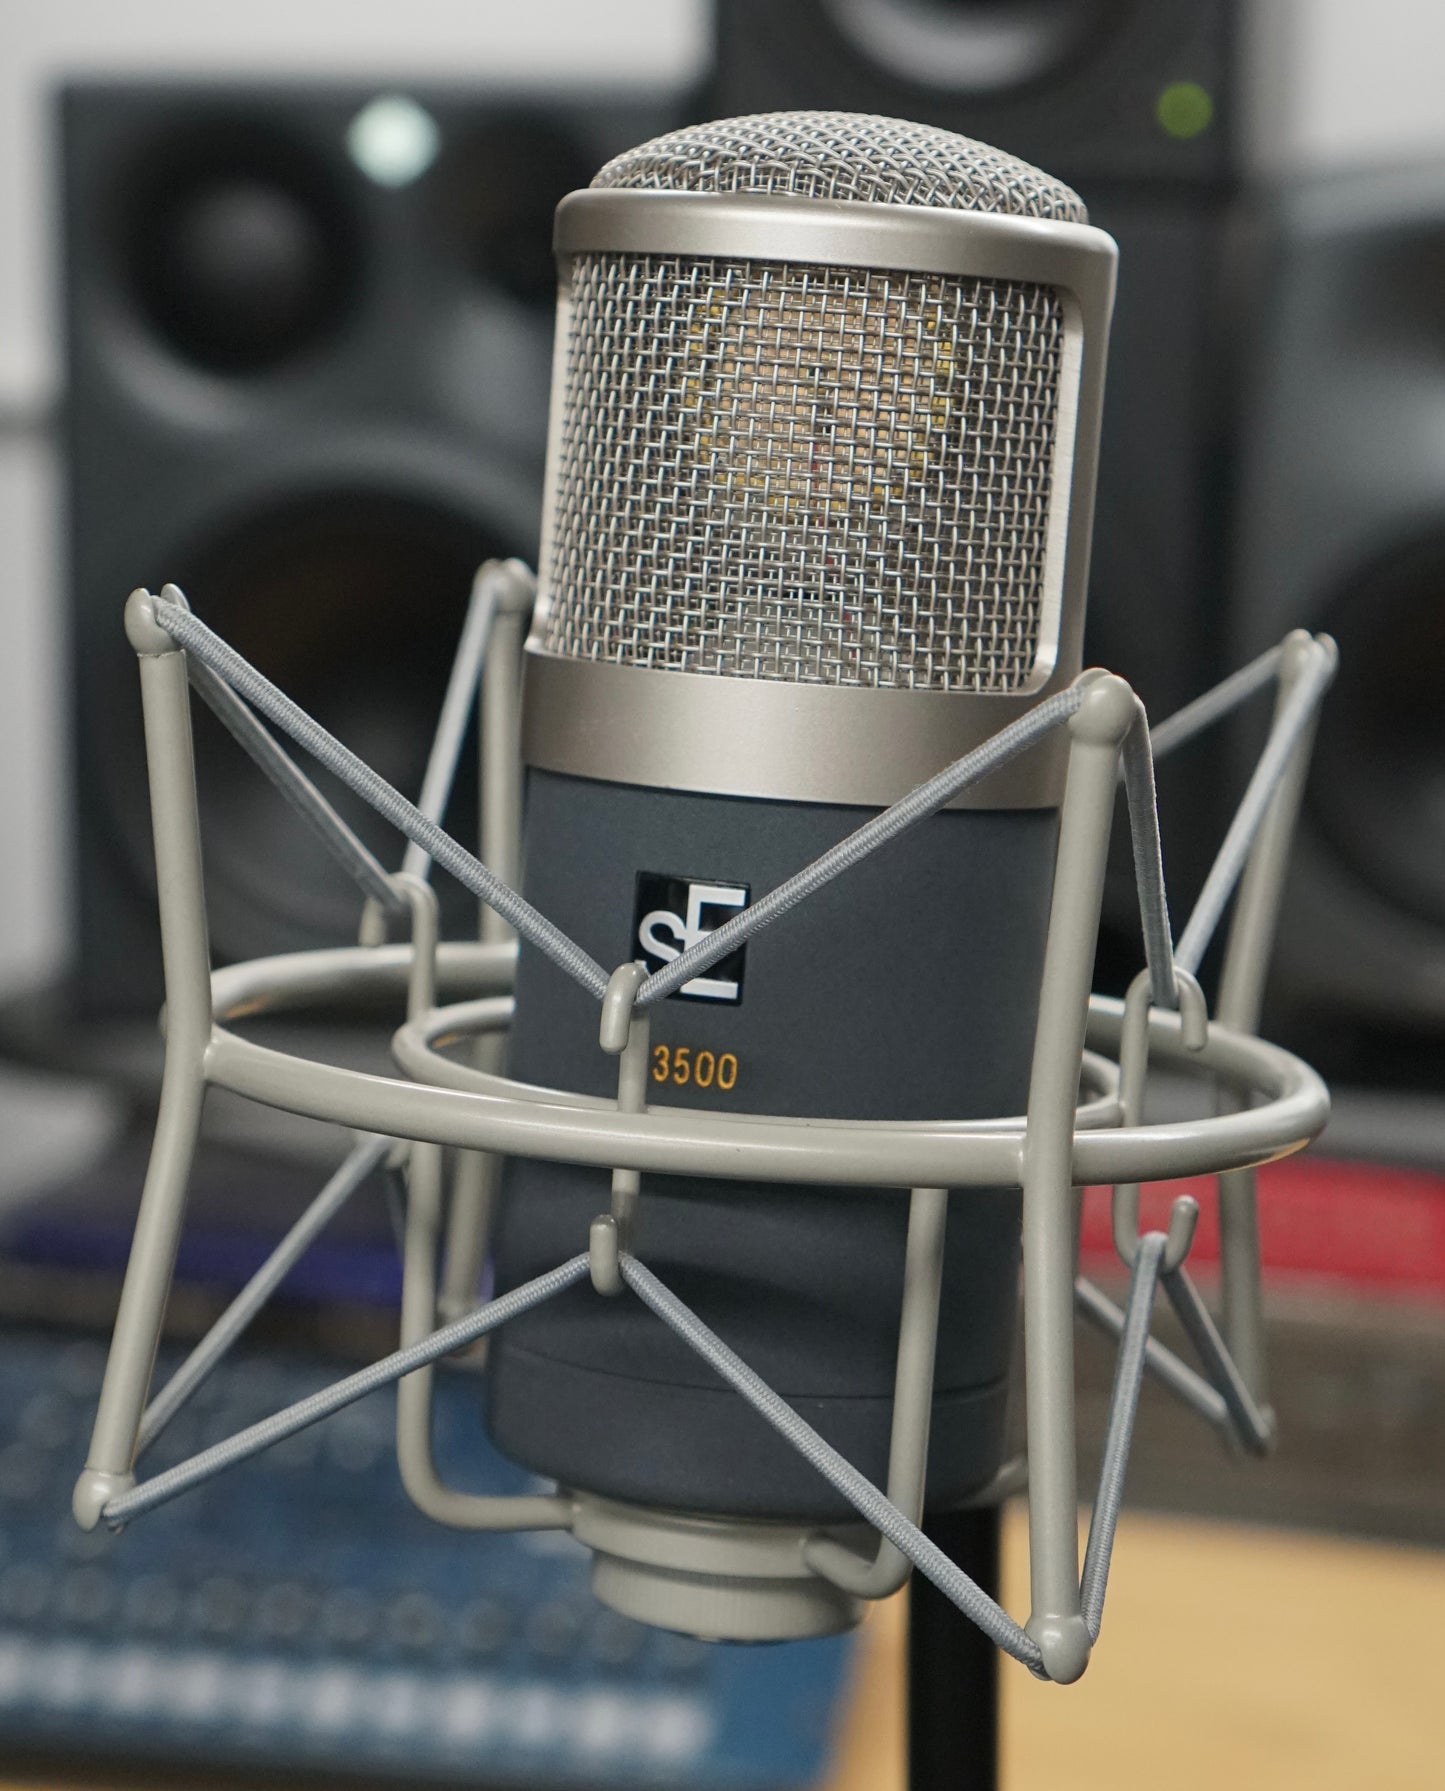 sE Electronics G3500 Condenser Microphone